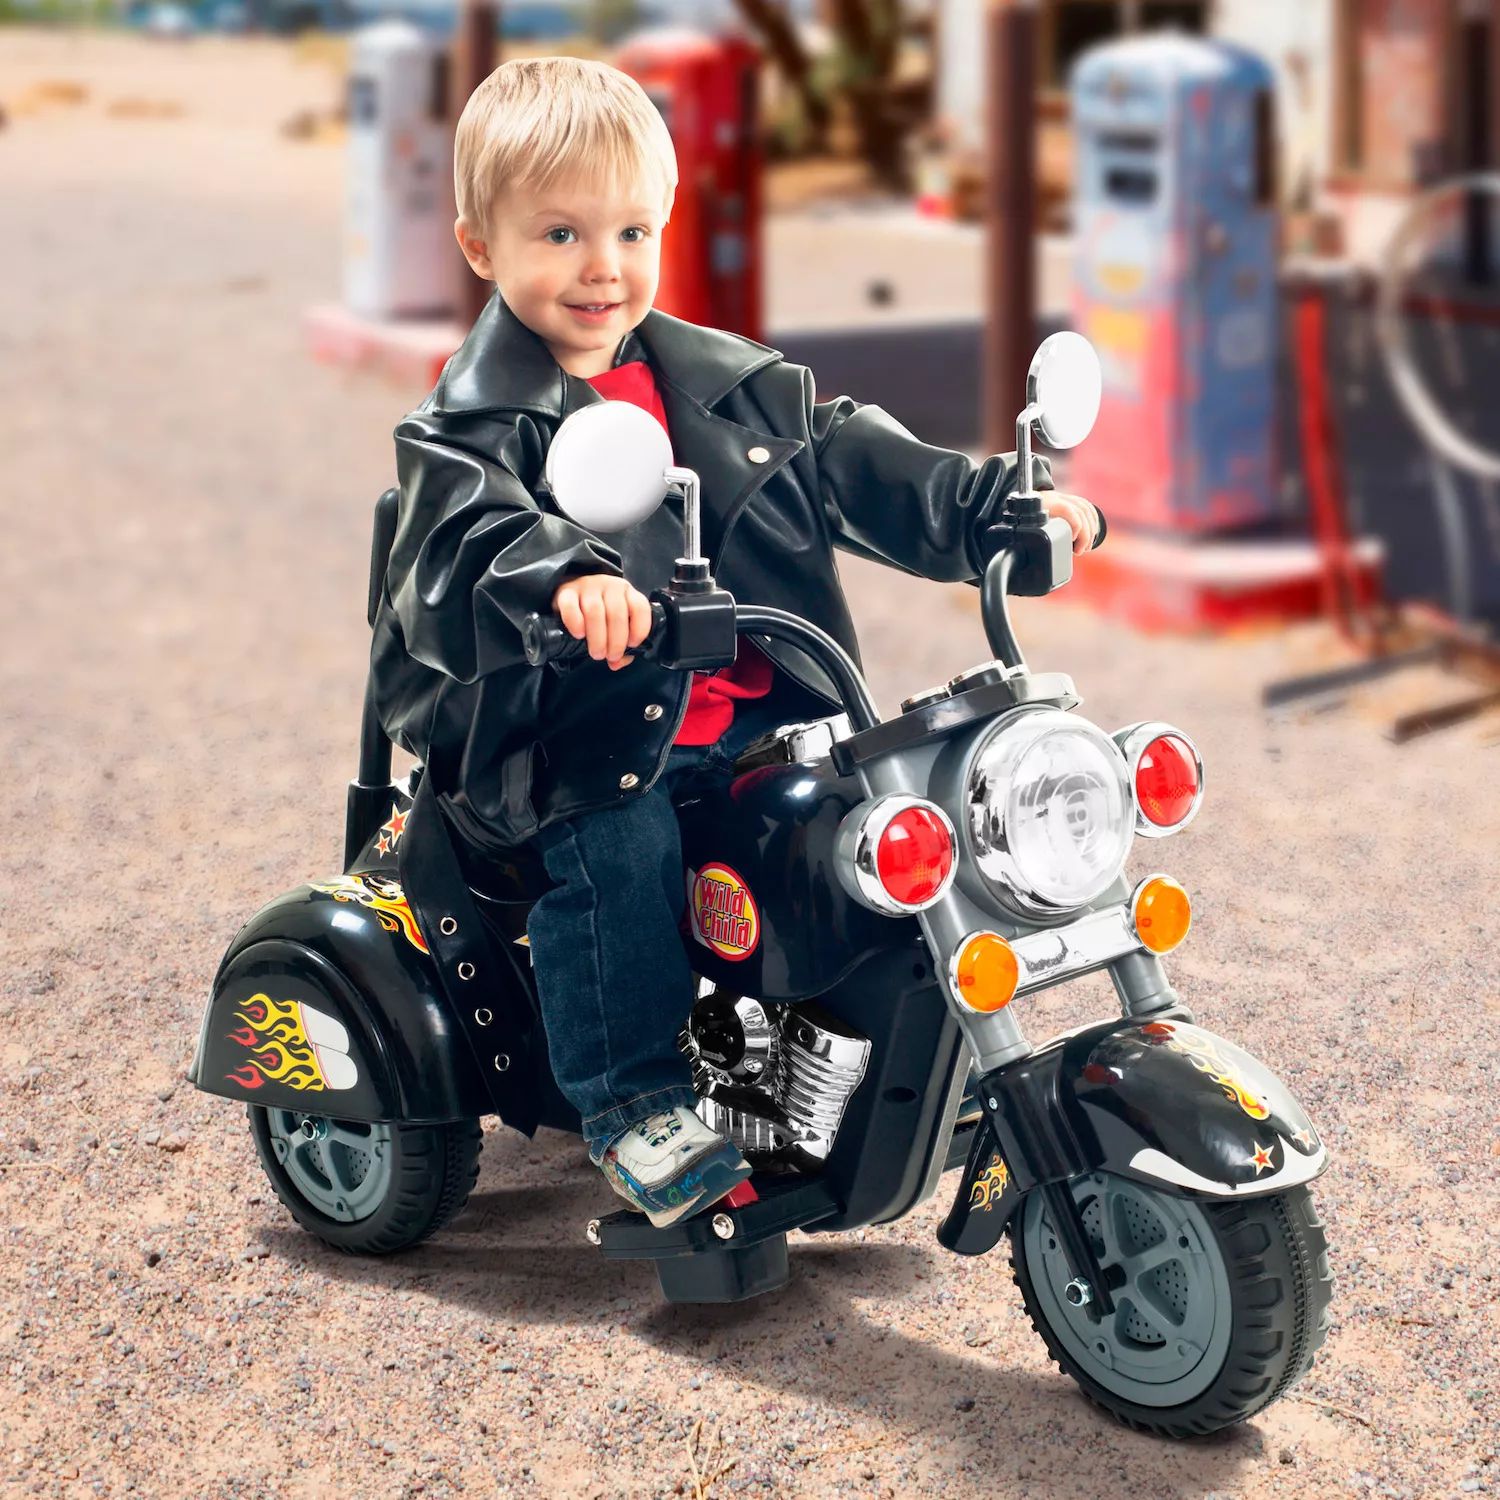 Детский электромотоцикл Харлей Дэвидсон. Детский мотоцикл Харлей Дэвидсон на аккумуляторе. D8360 мотоцикл детский. Детский электромотоцикл Wild child. Купить детский мопед